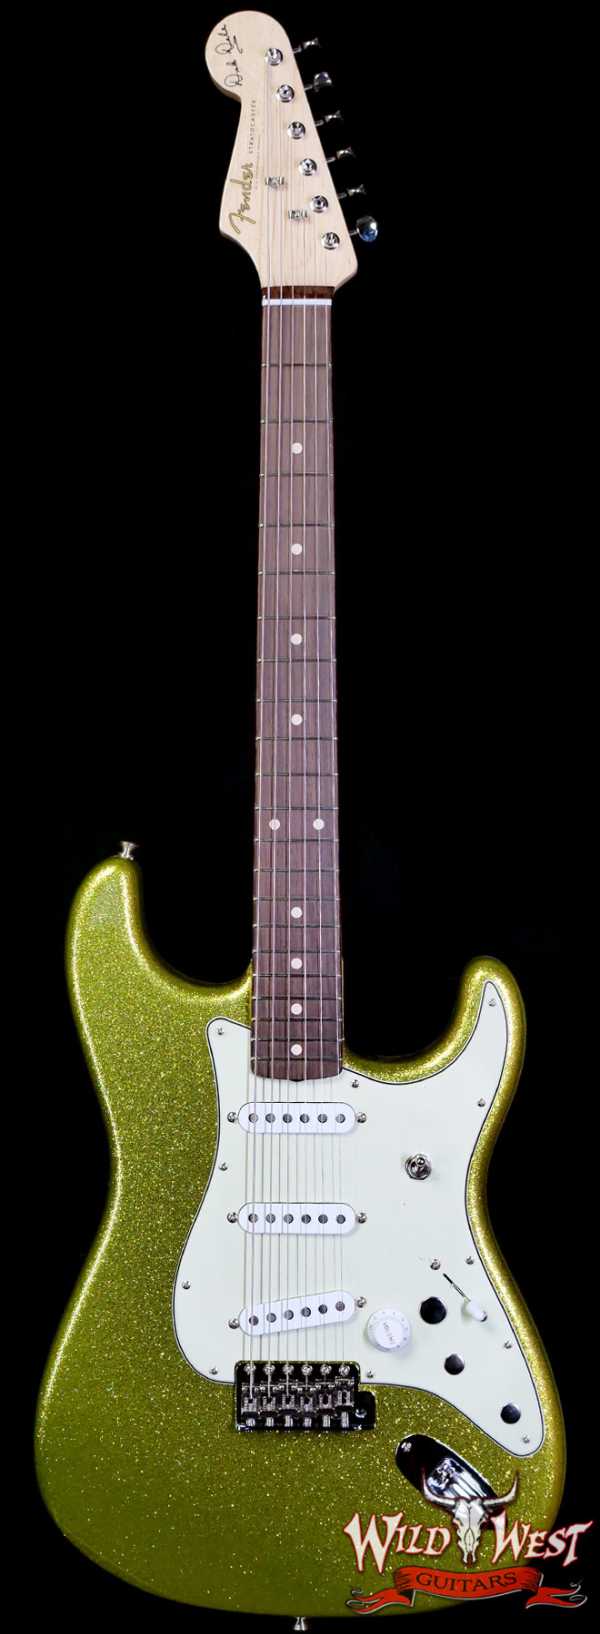 Fender Custom Shop Dick Dale Stratocaster AA Birdseye Maple Neck Rosewood Fingerboard NOS Chartreuse Sparkle 7.65 LBS